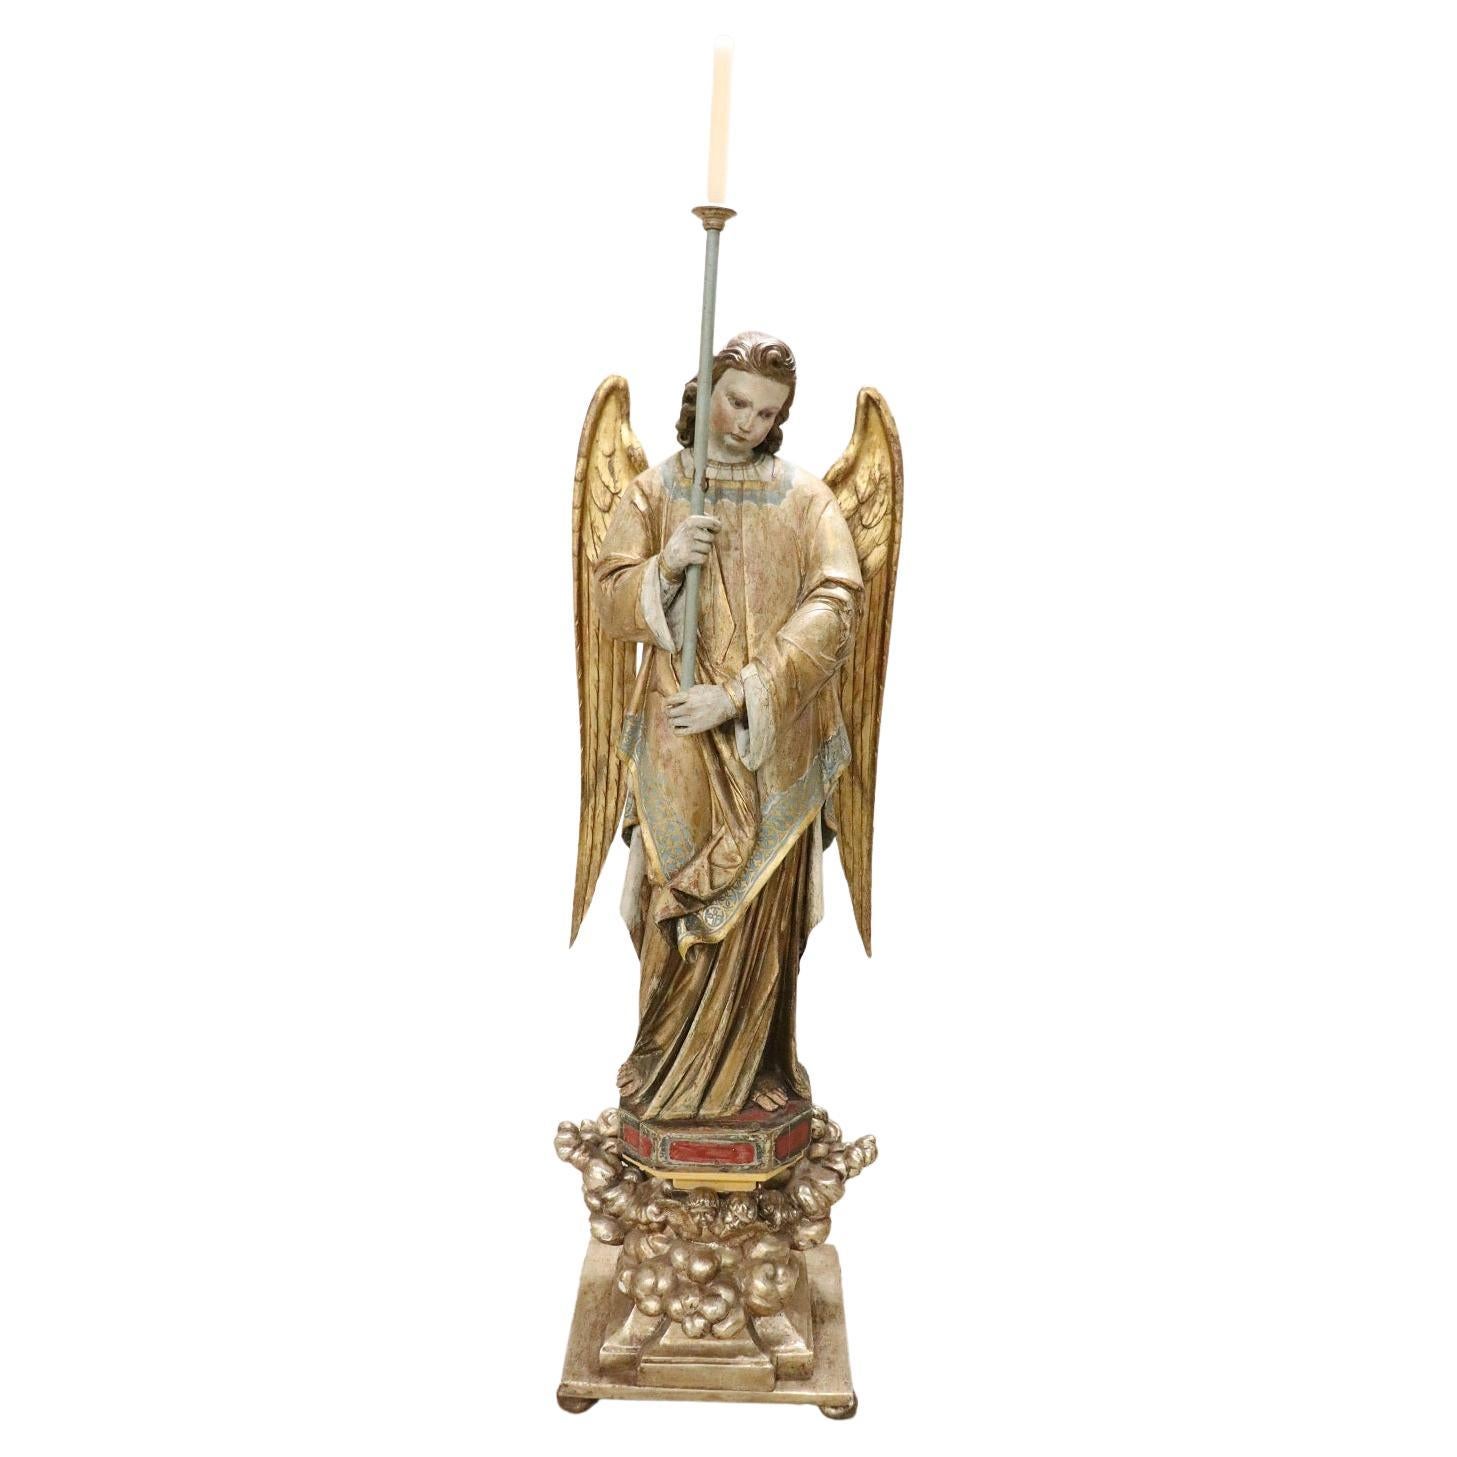 Architectural Salvage/ Architectural Sculpture/ Brass Sculpture/ Classical Brass Angel